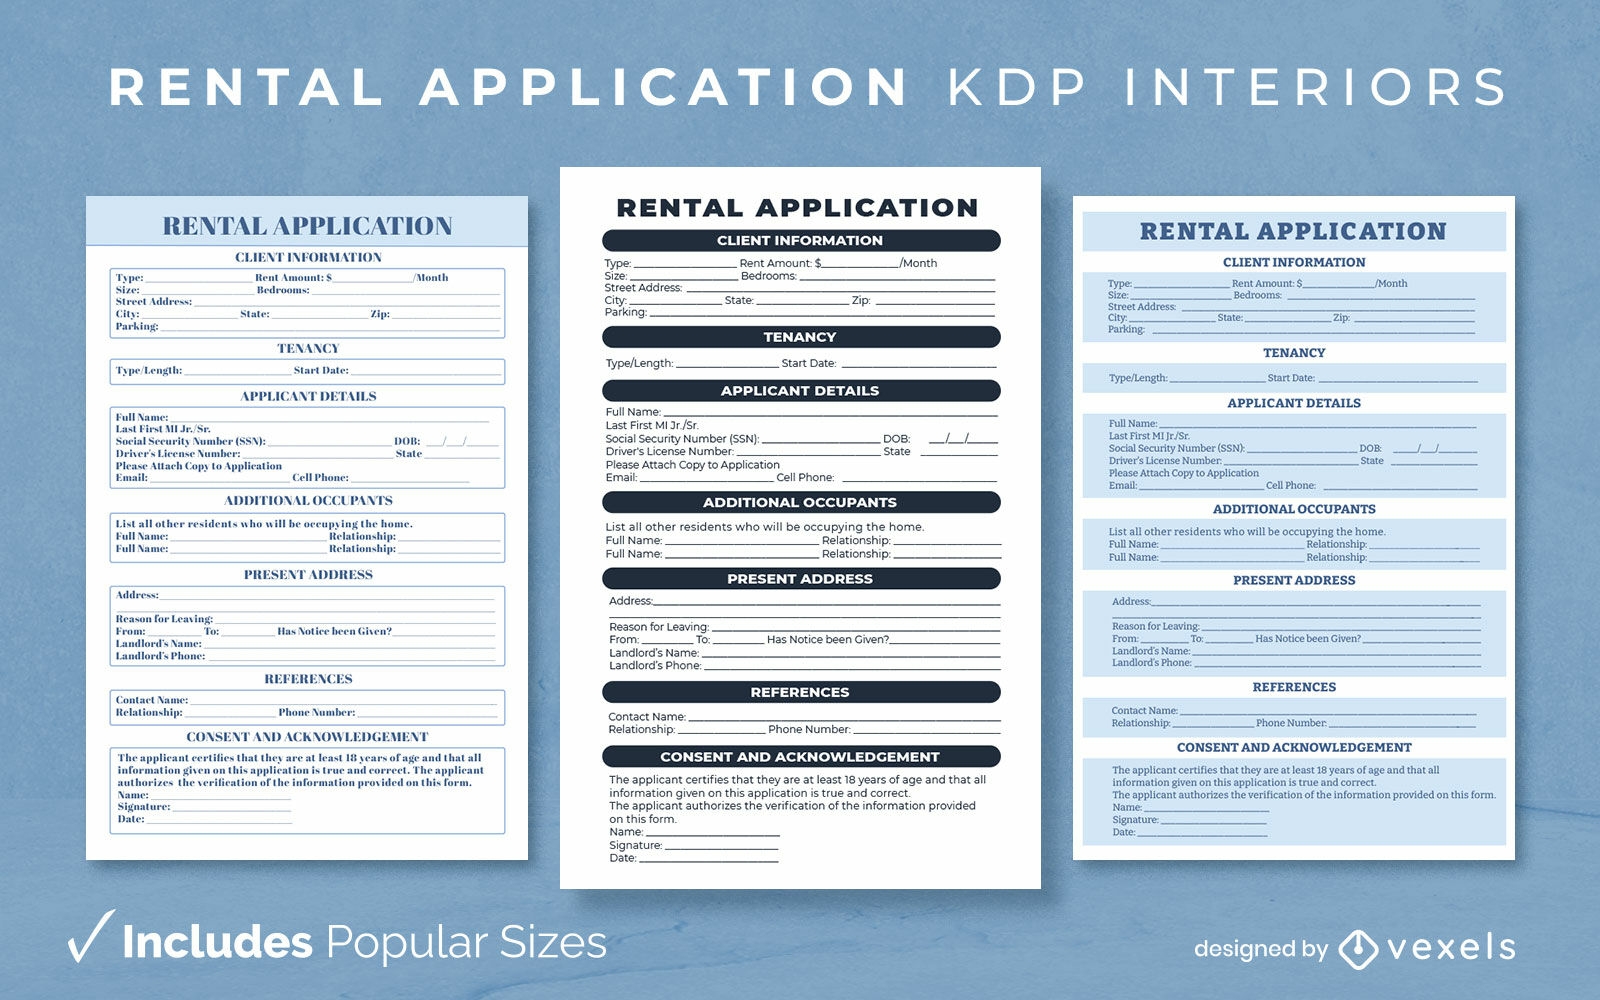 Rental application document KDP interior design